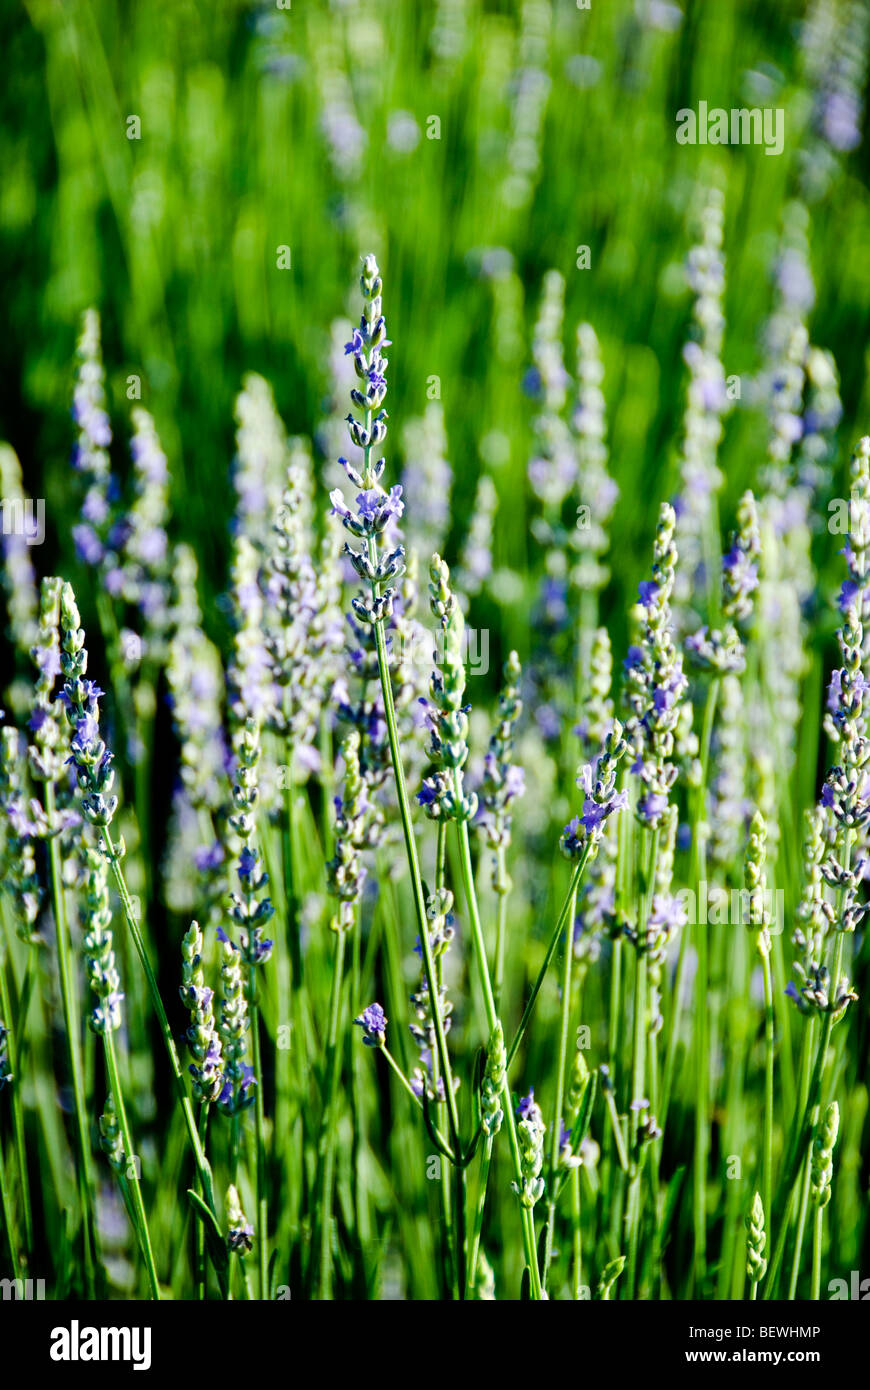 Lavenders (Lavandula angustifolia hidcote) in a field Stock Photo